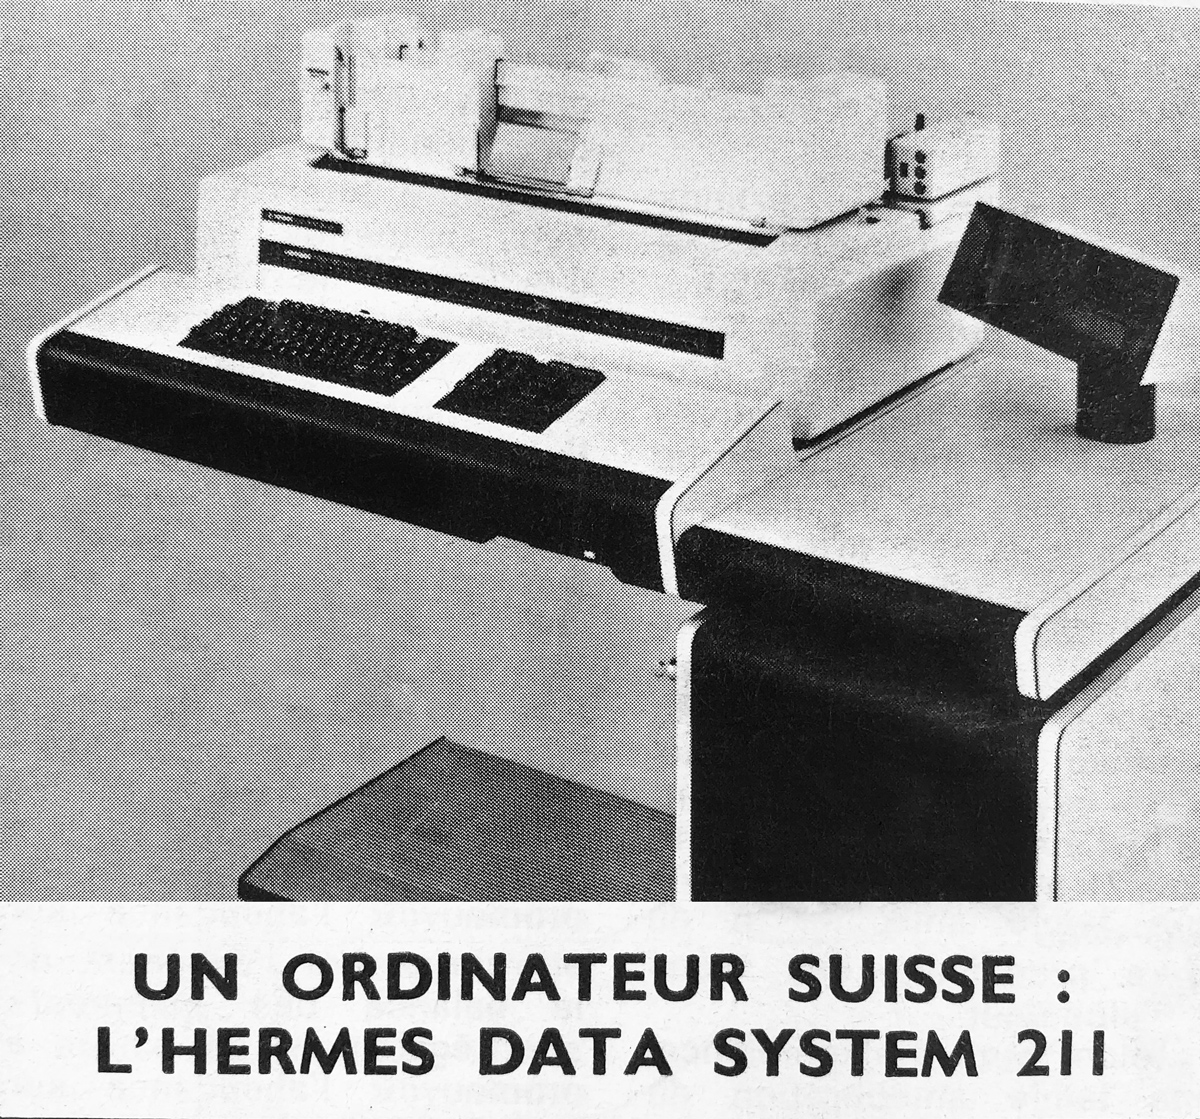 Hermès Data System 211